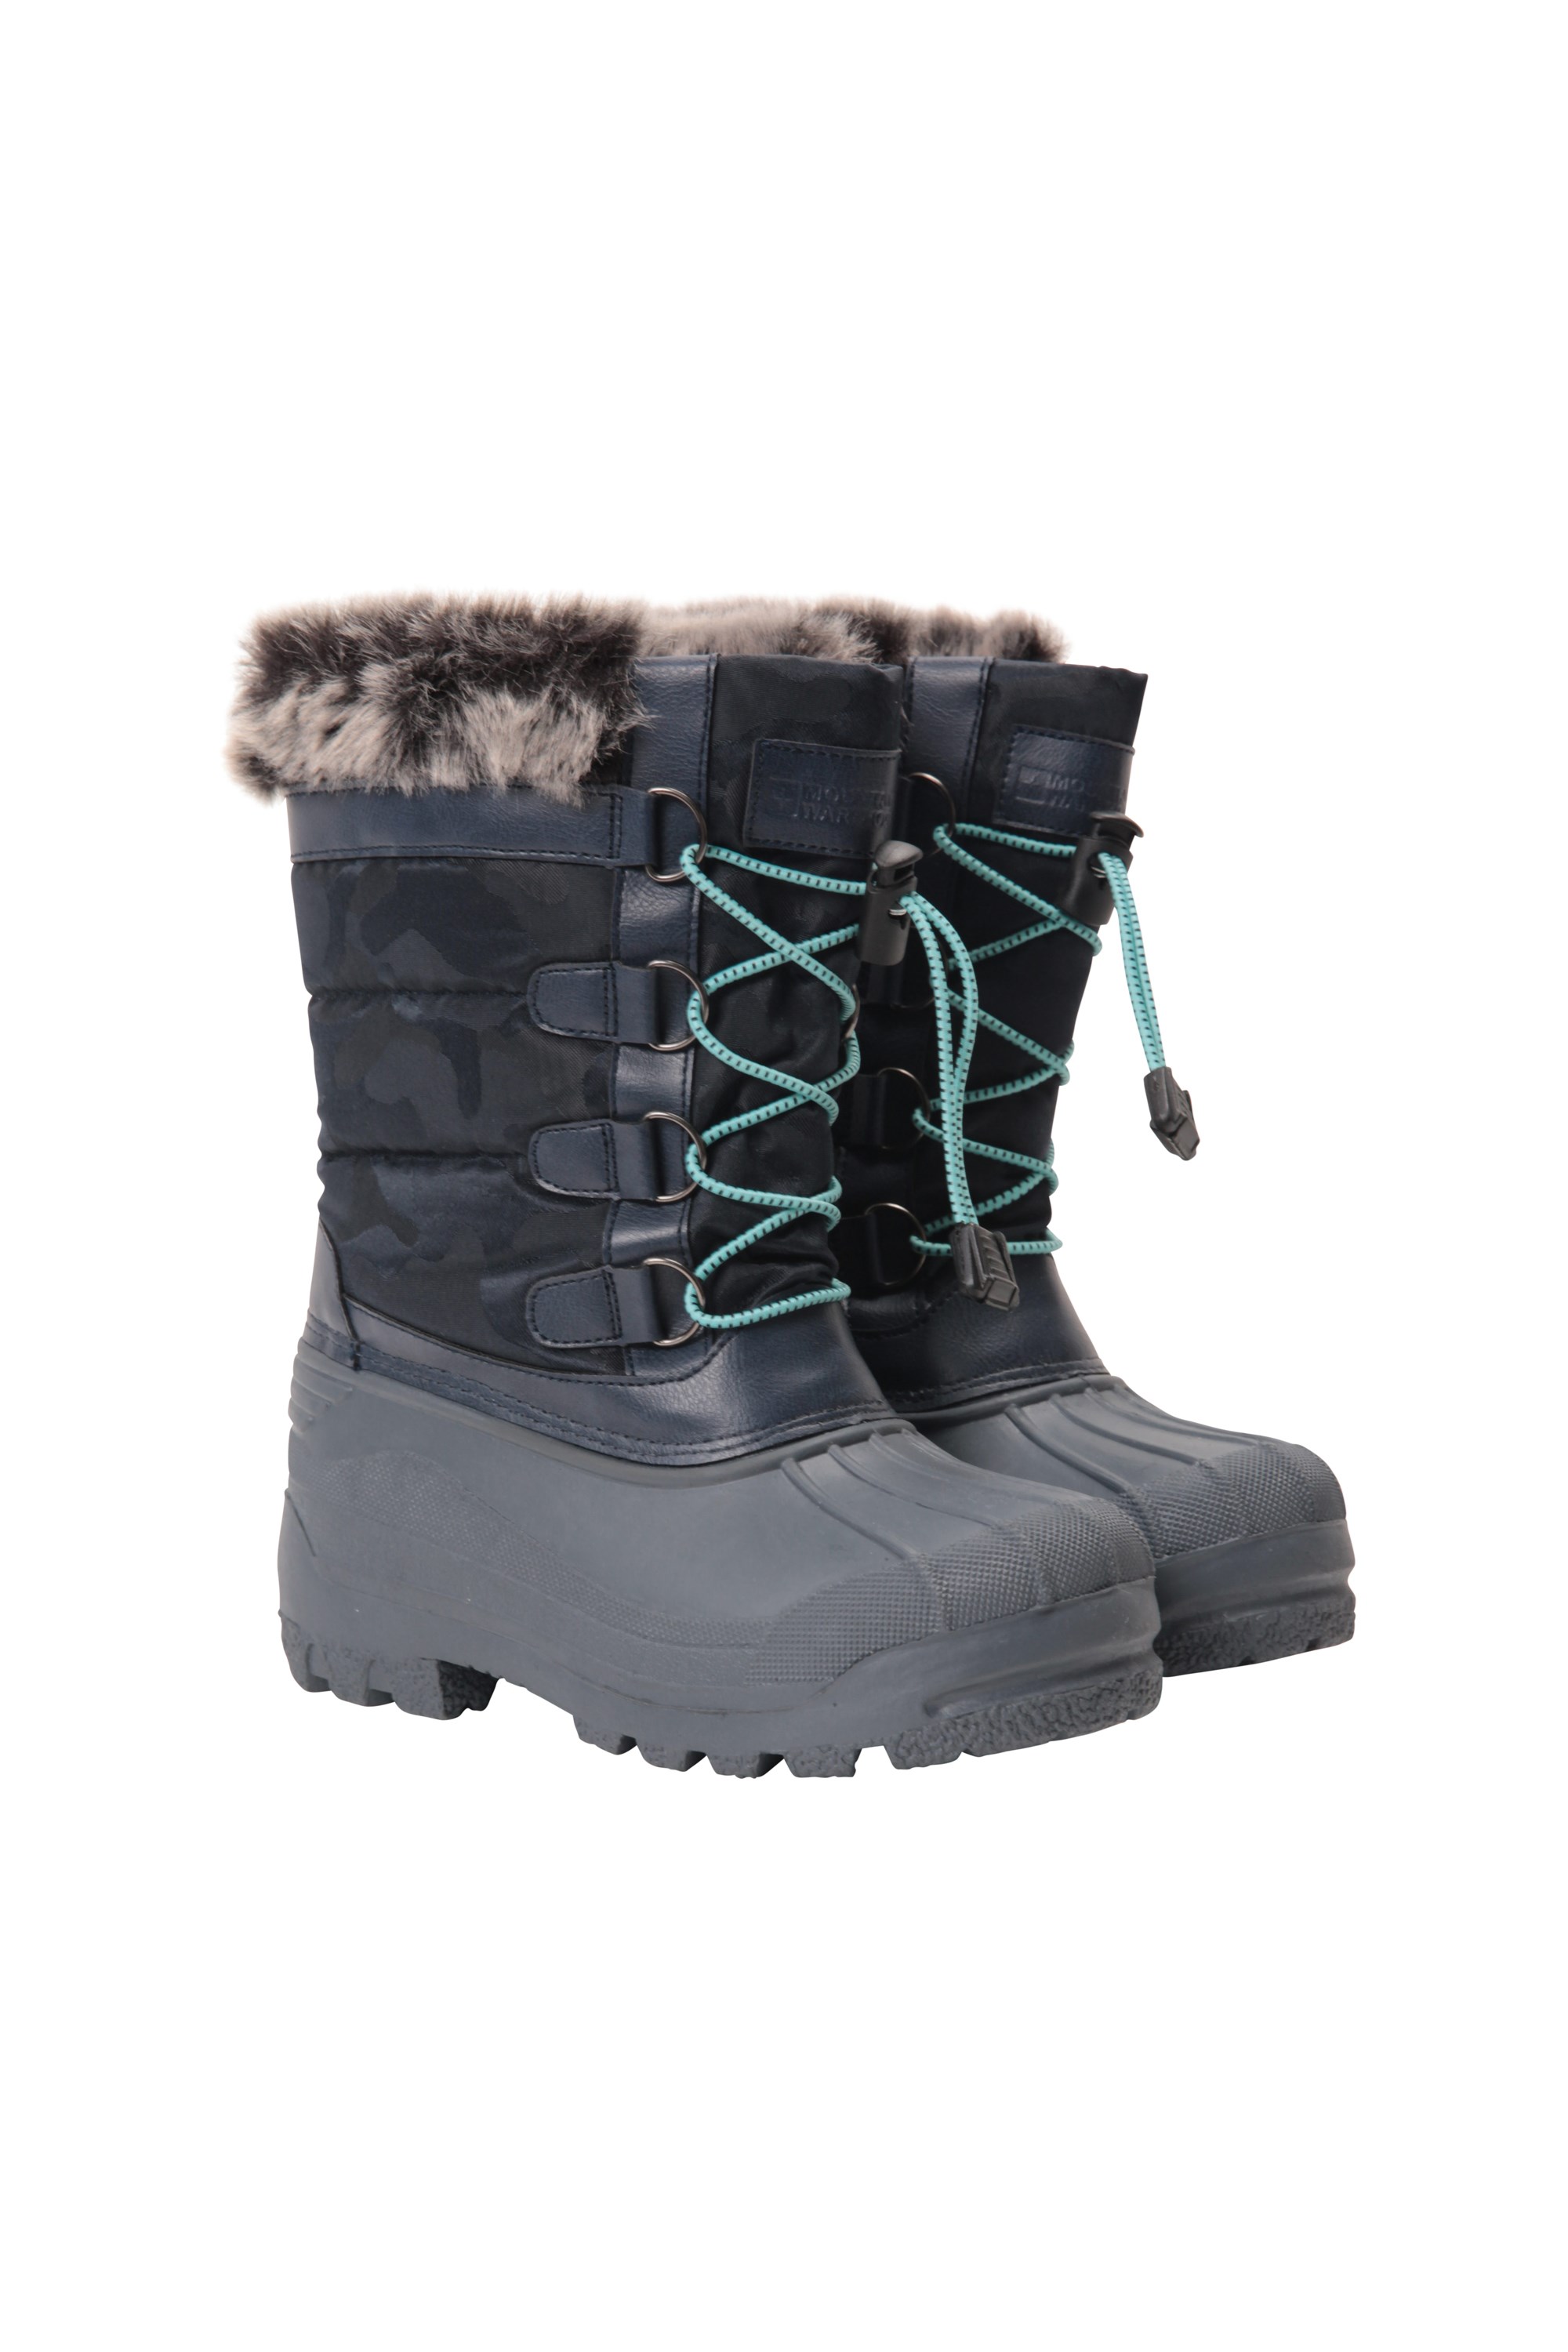 Alaska Thermal Kids Snow Boots - Navy